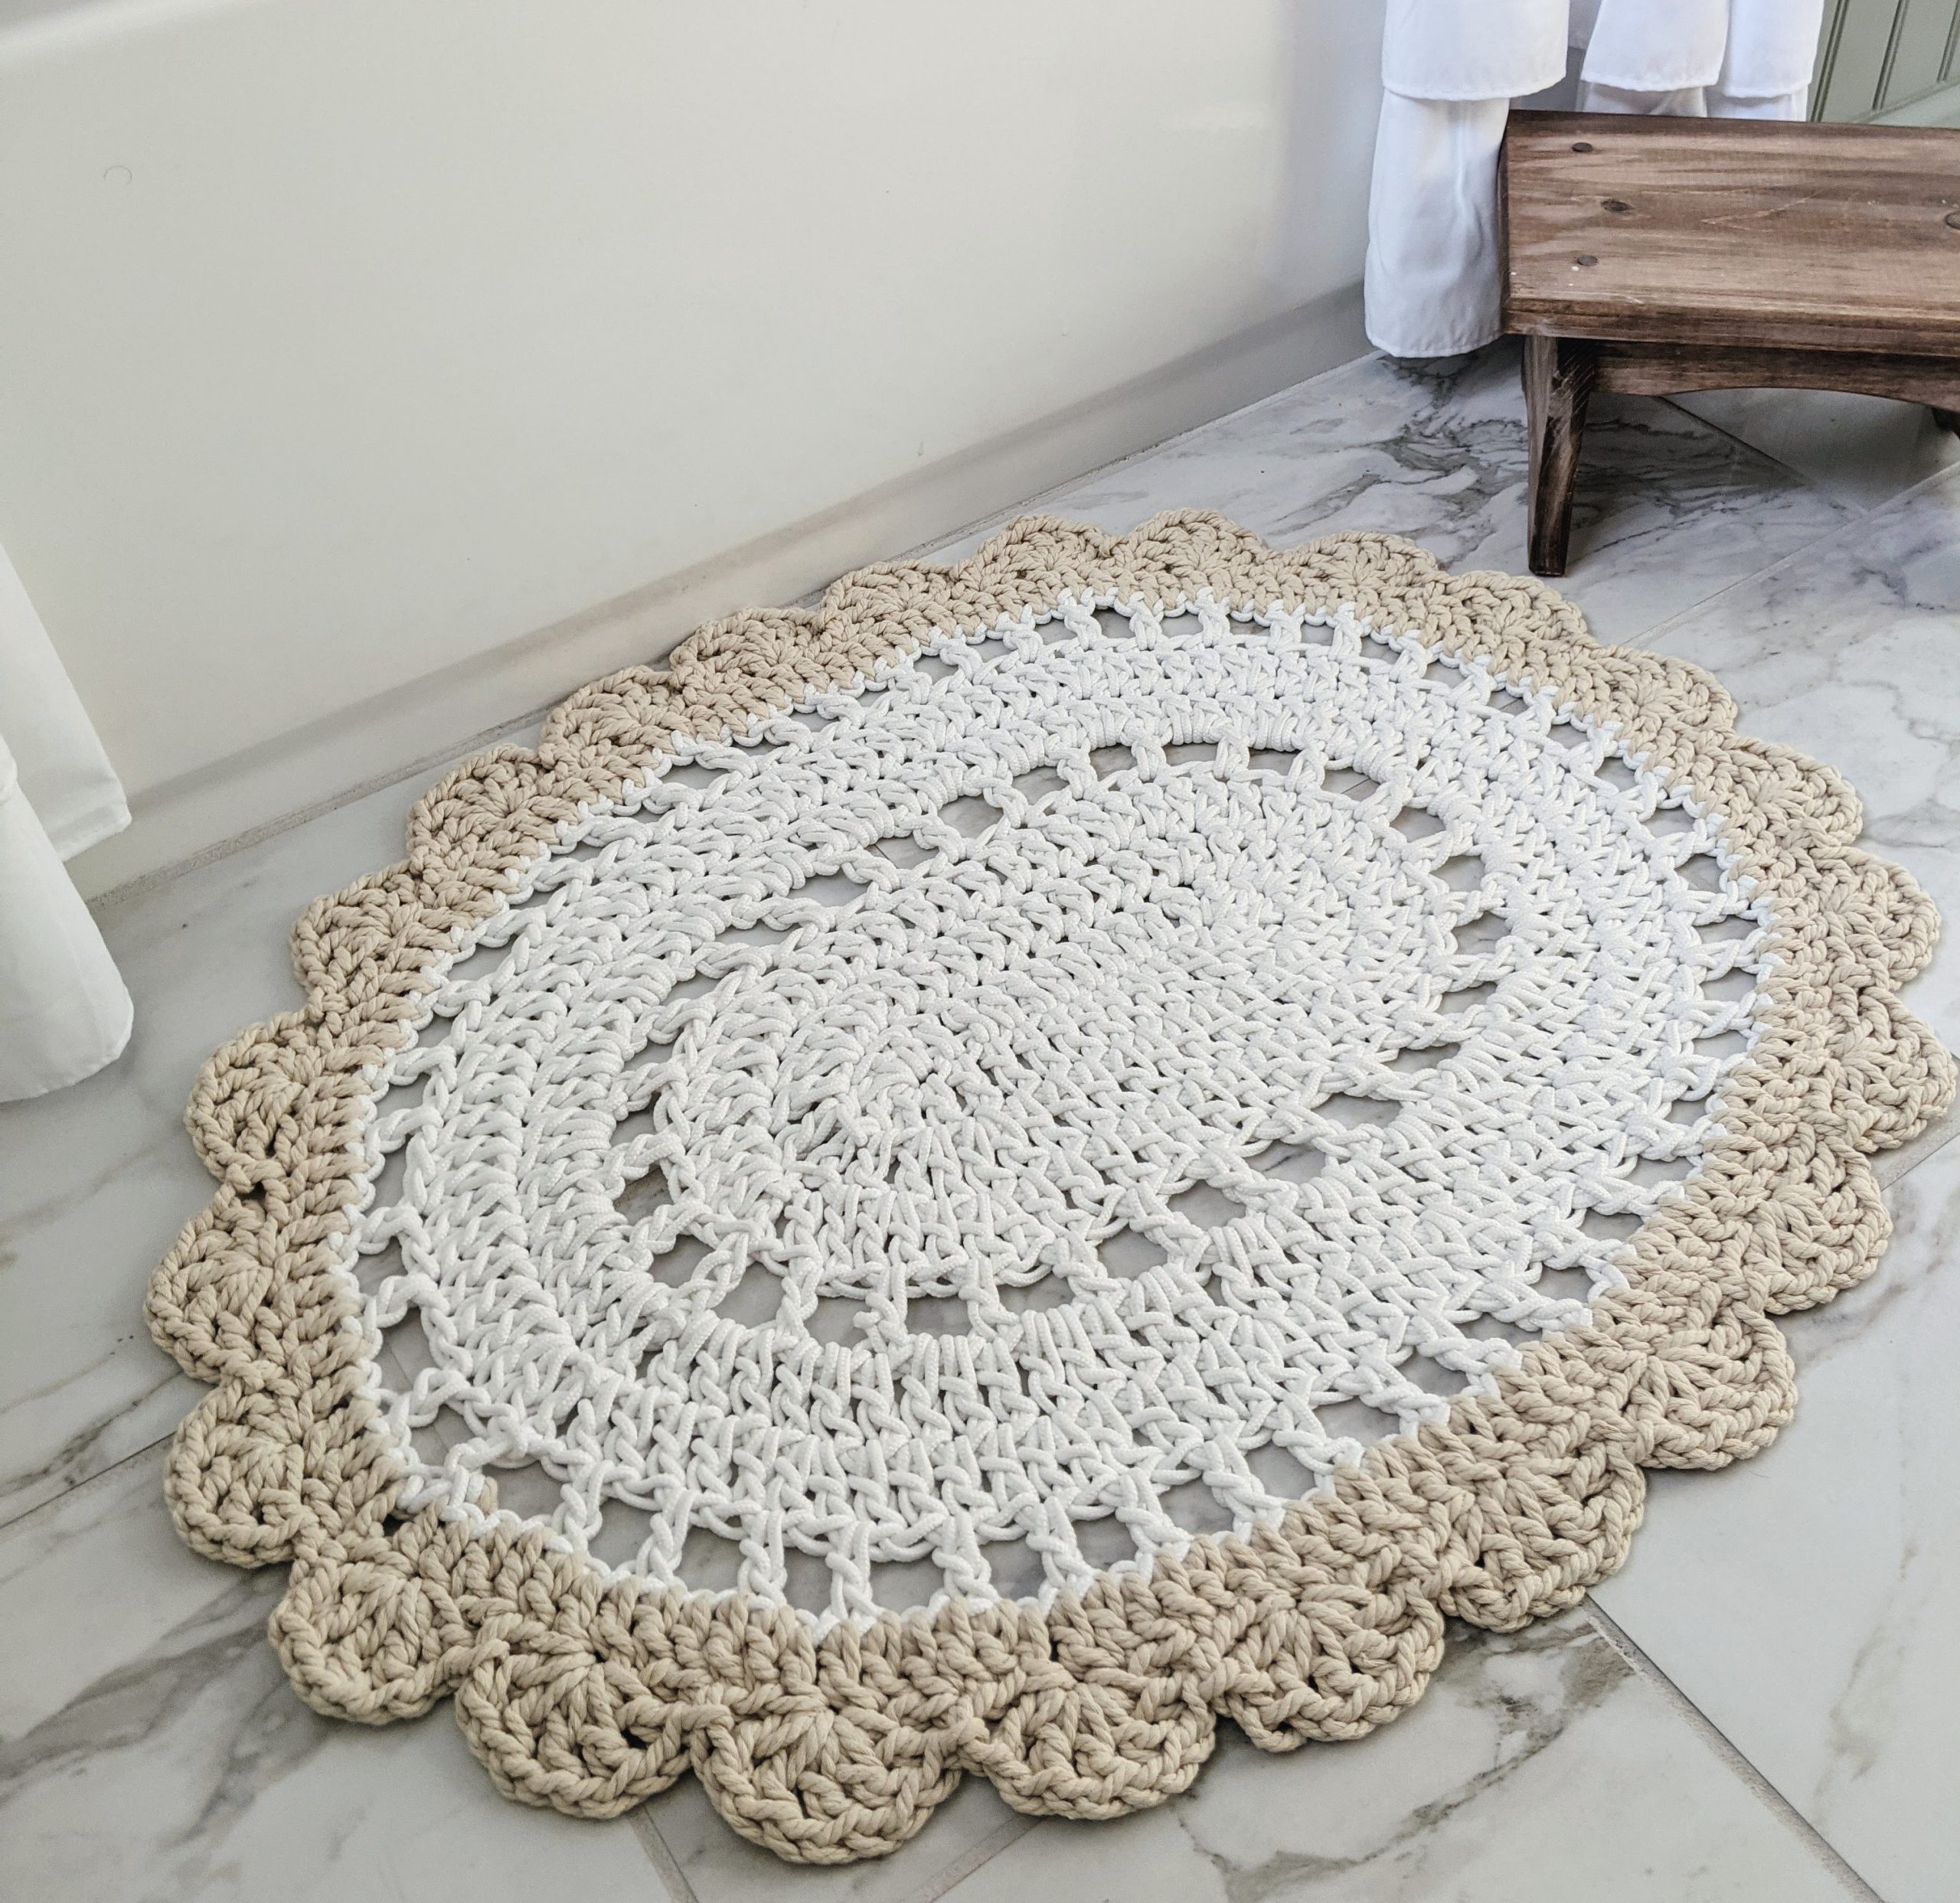 Oval Crochet Rug Free Pattern For A Vintage Style Bath Mat Joyfully Treasured